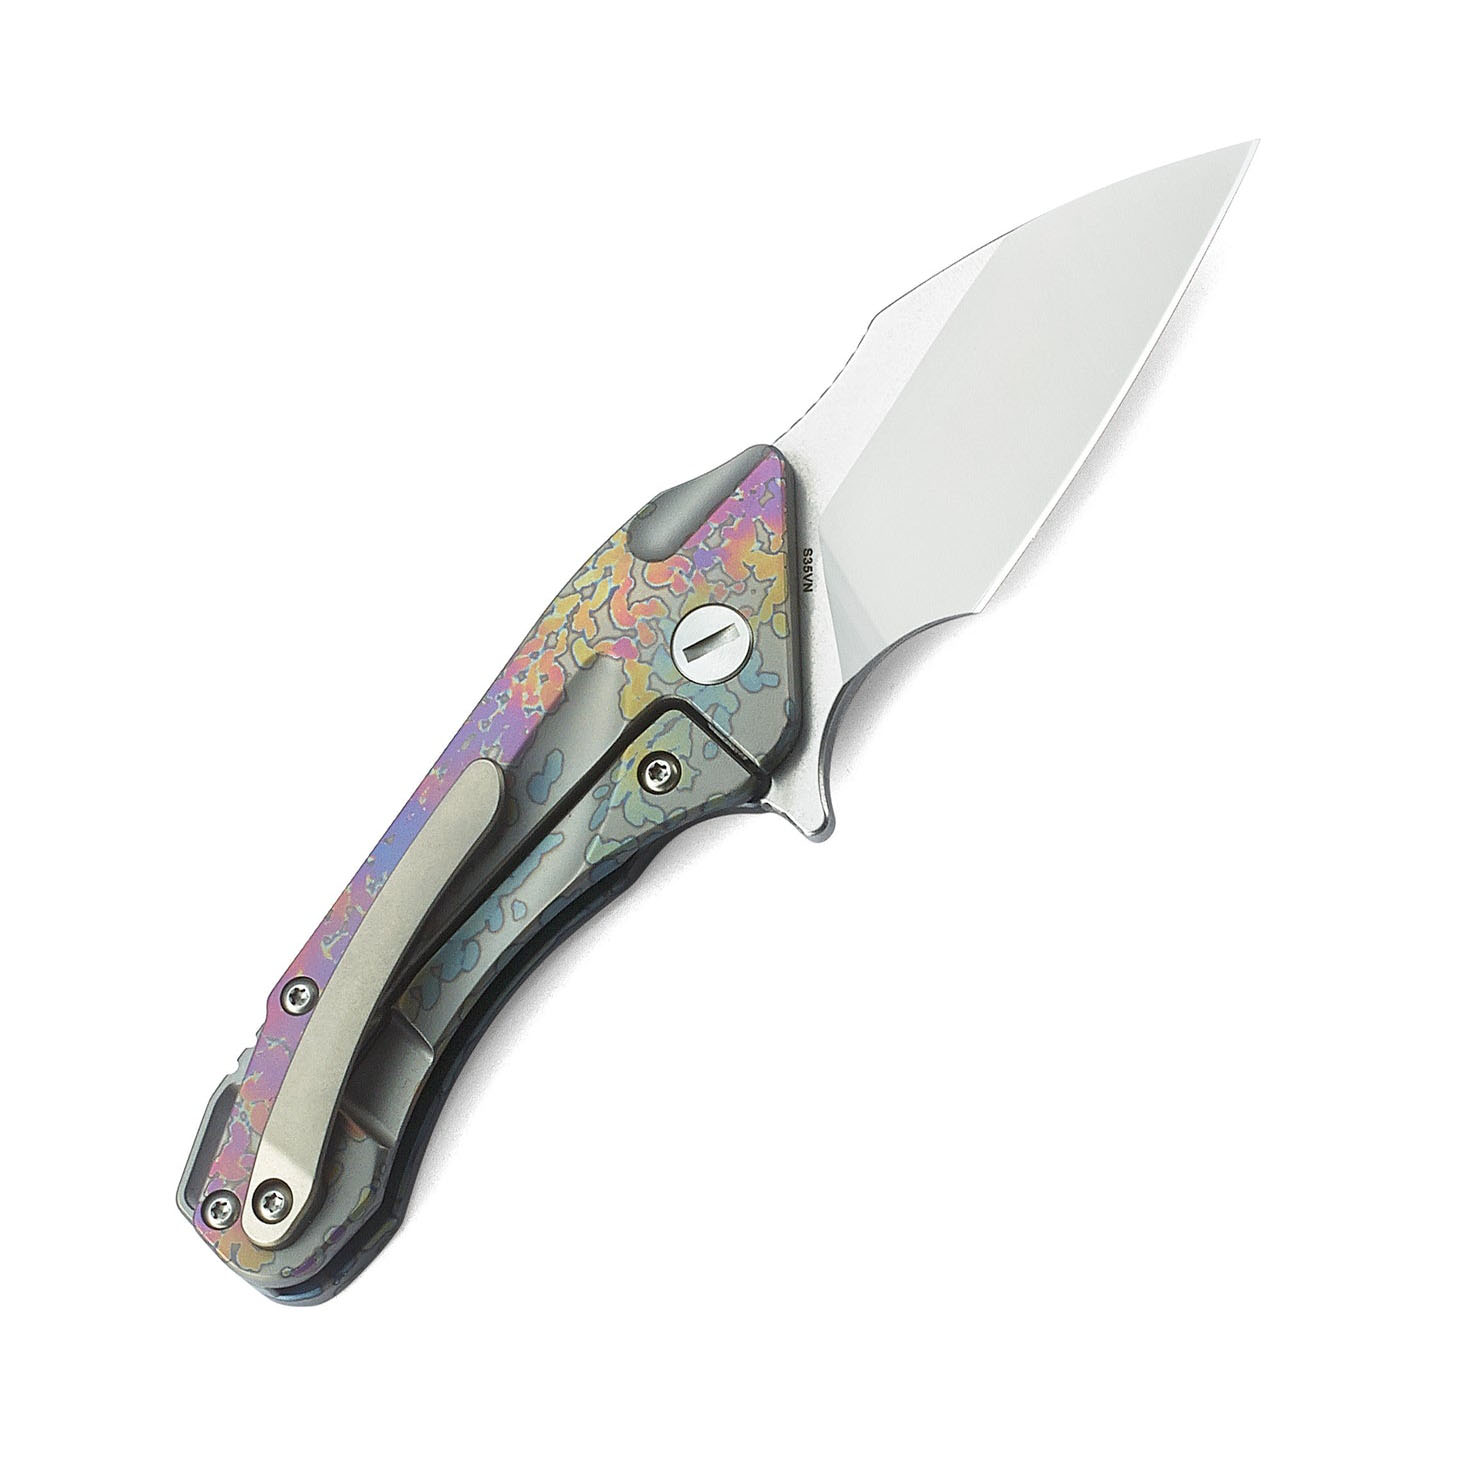 Bestech Knives Goblin CPM-S35VN钢 钛合金镶嵌碳纤维柄 BT1711D 1180